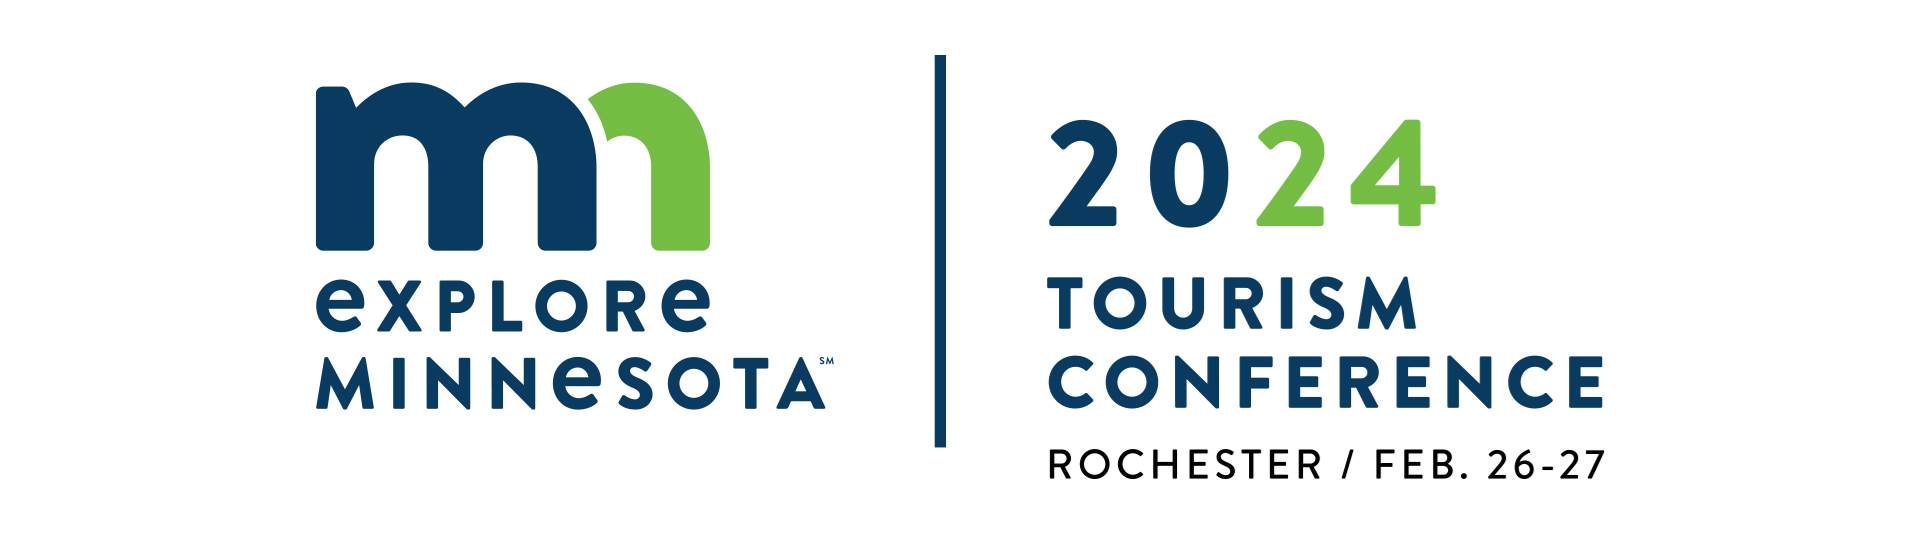 2024 Explore Minnesota Tourism Conference